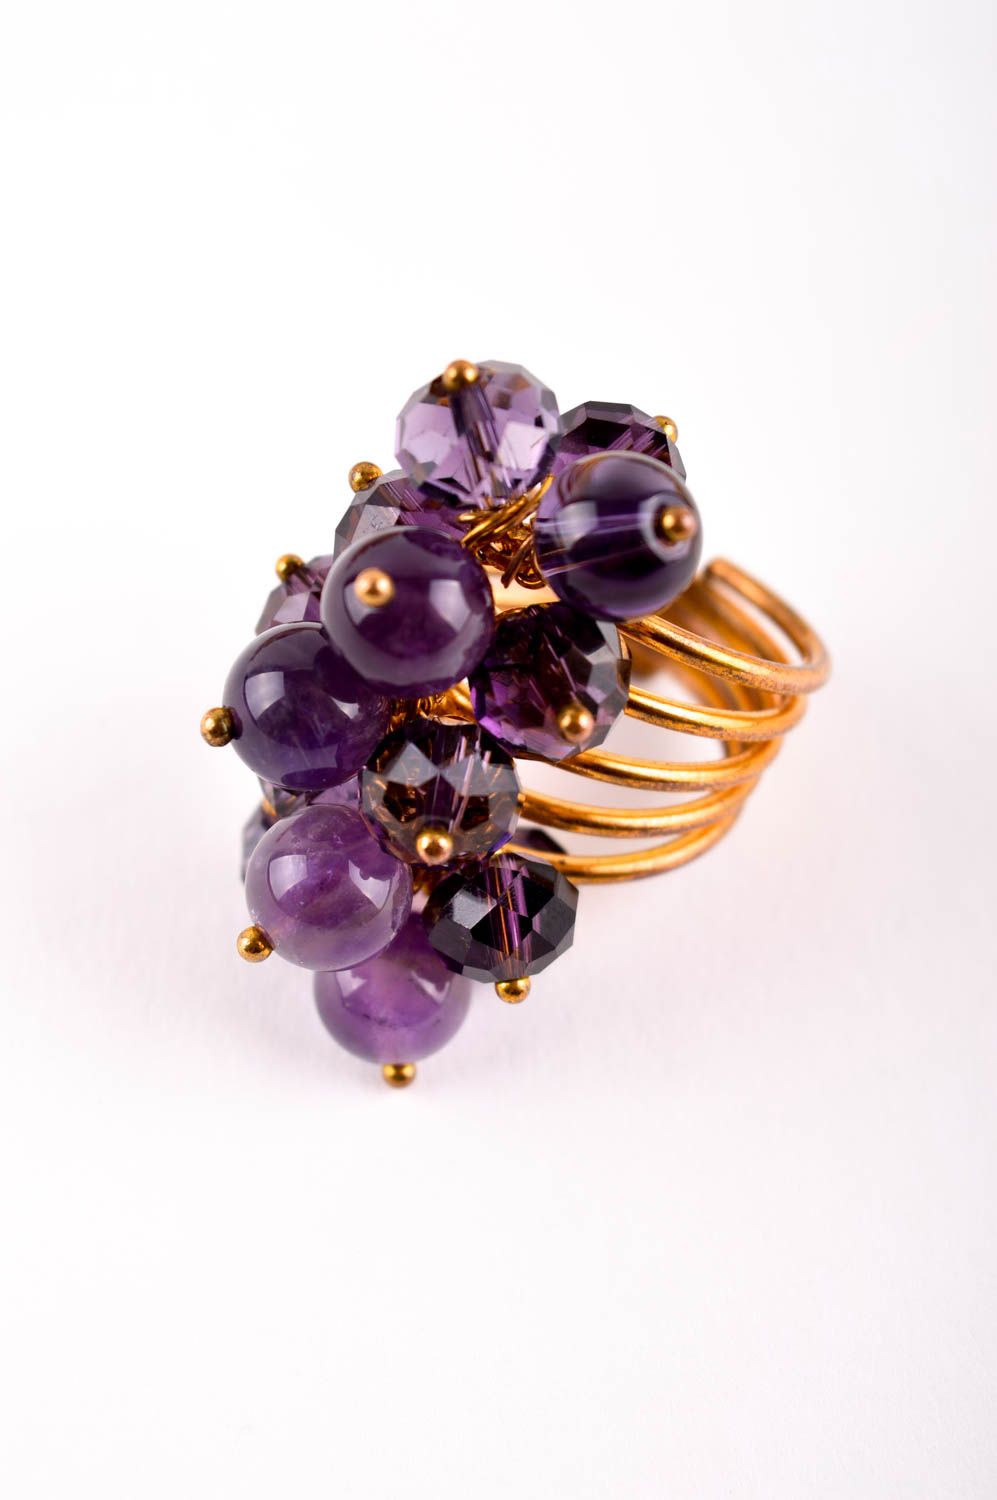 Handmade ring beautiful ring with stones designer accessory unusual jewelry photo 2